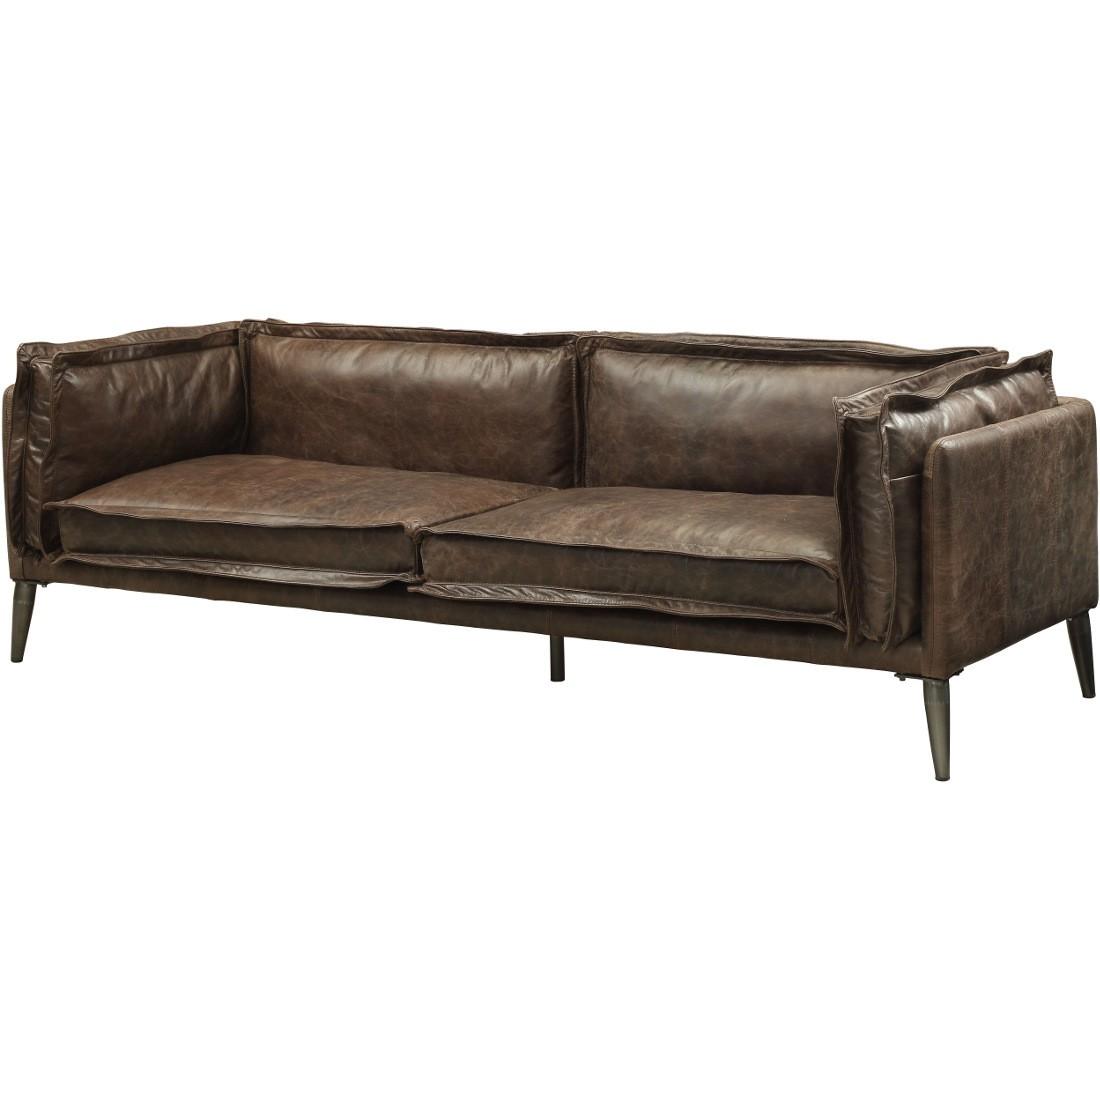 Contemporary Sofa Porchester Porchester-52480 in Chocolate Top grain leather